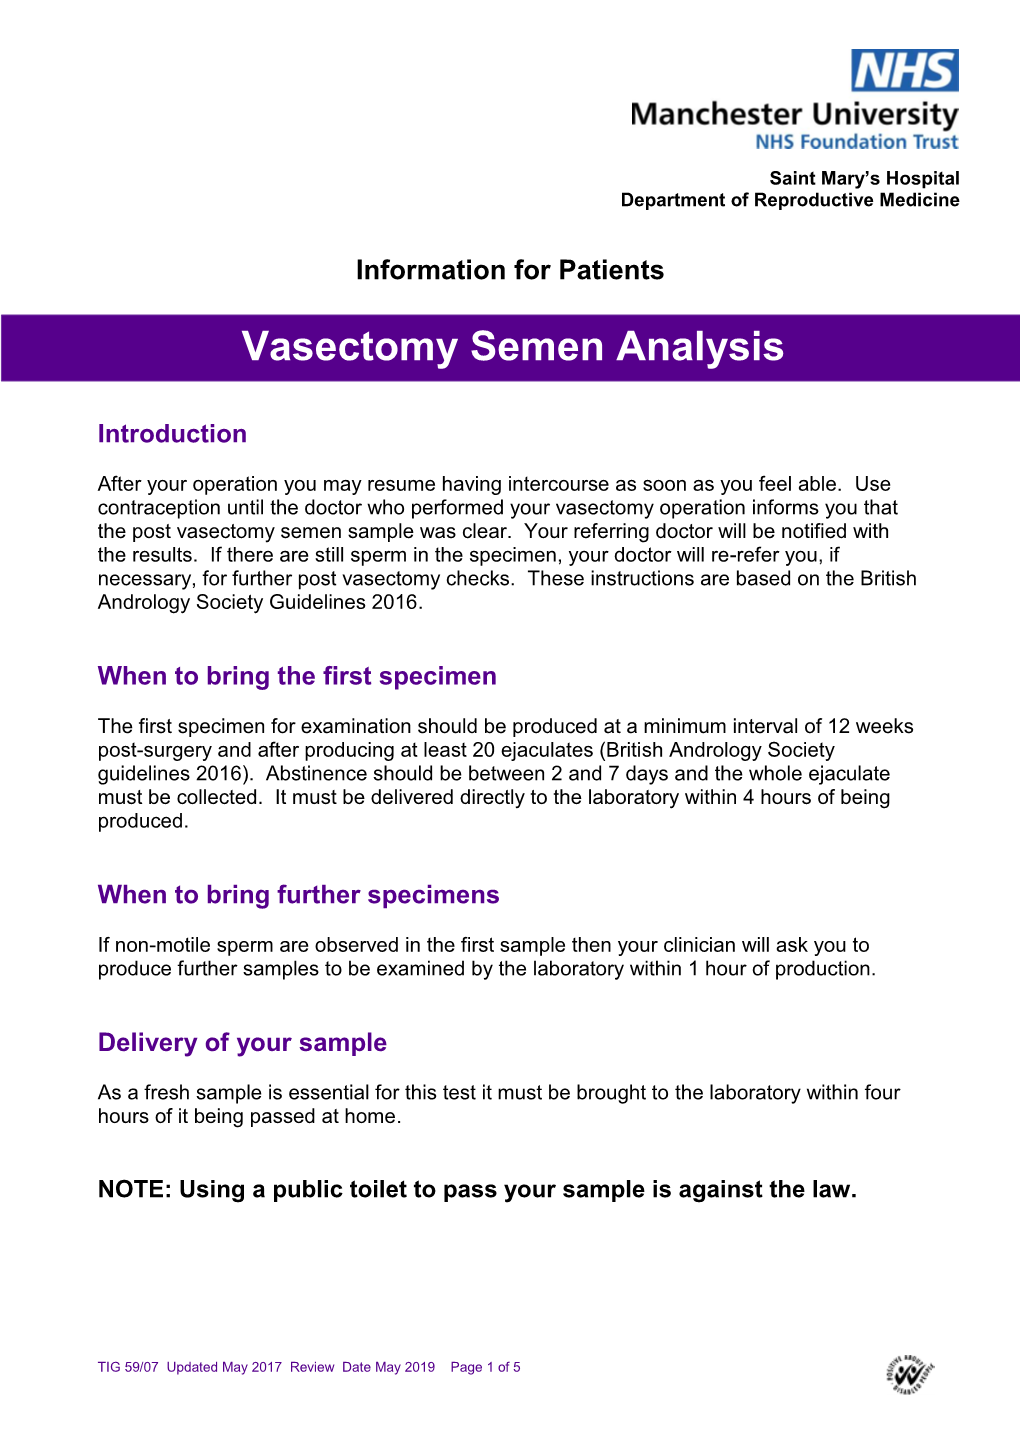 Vasectomy Semen Analysis